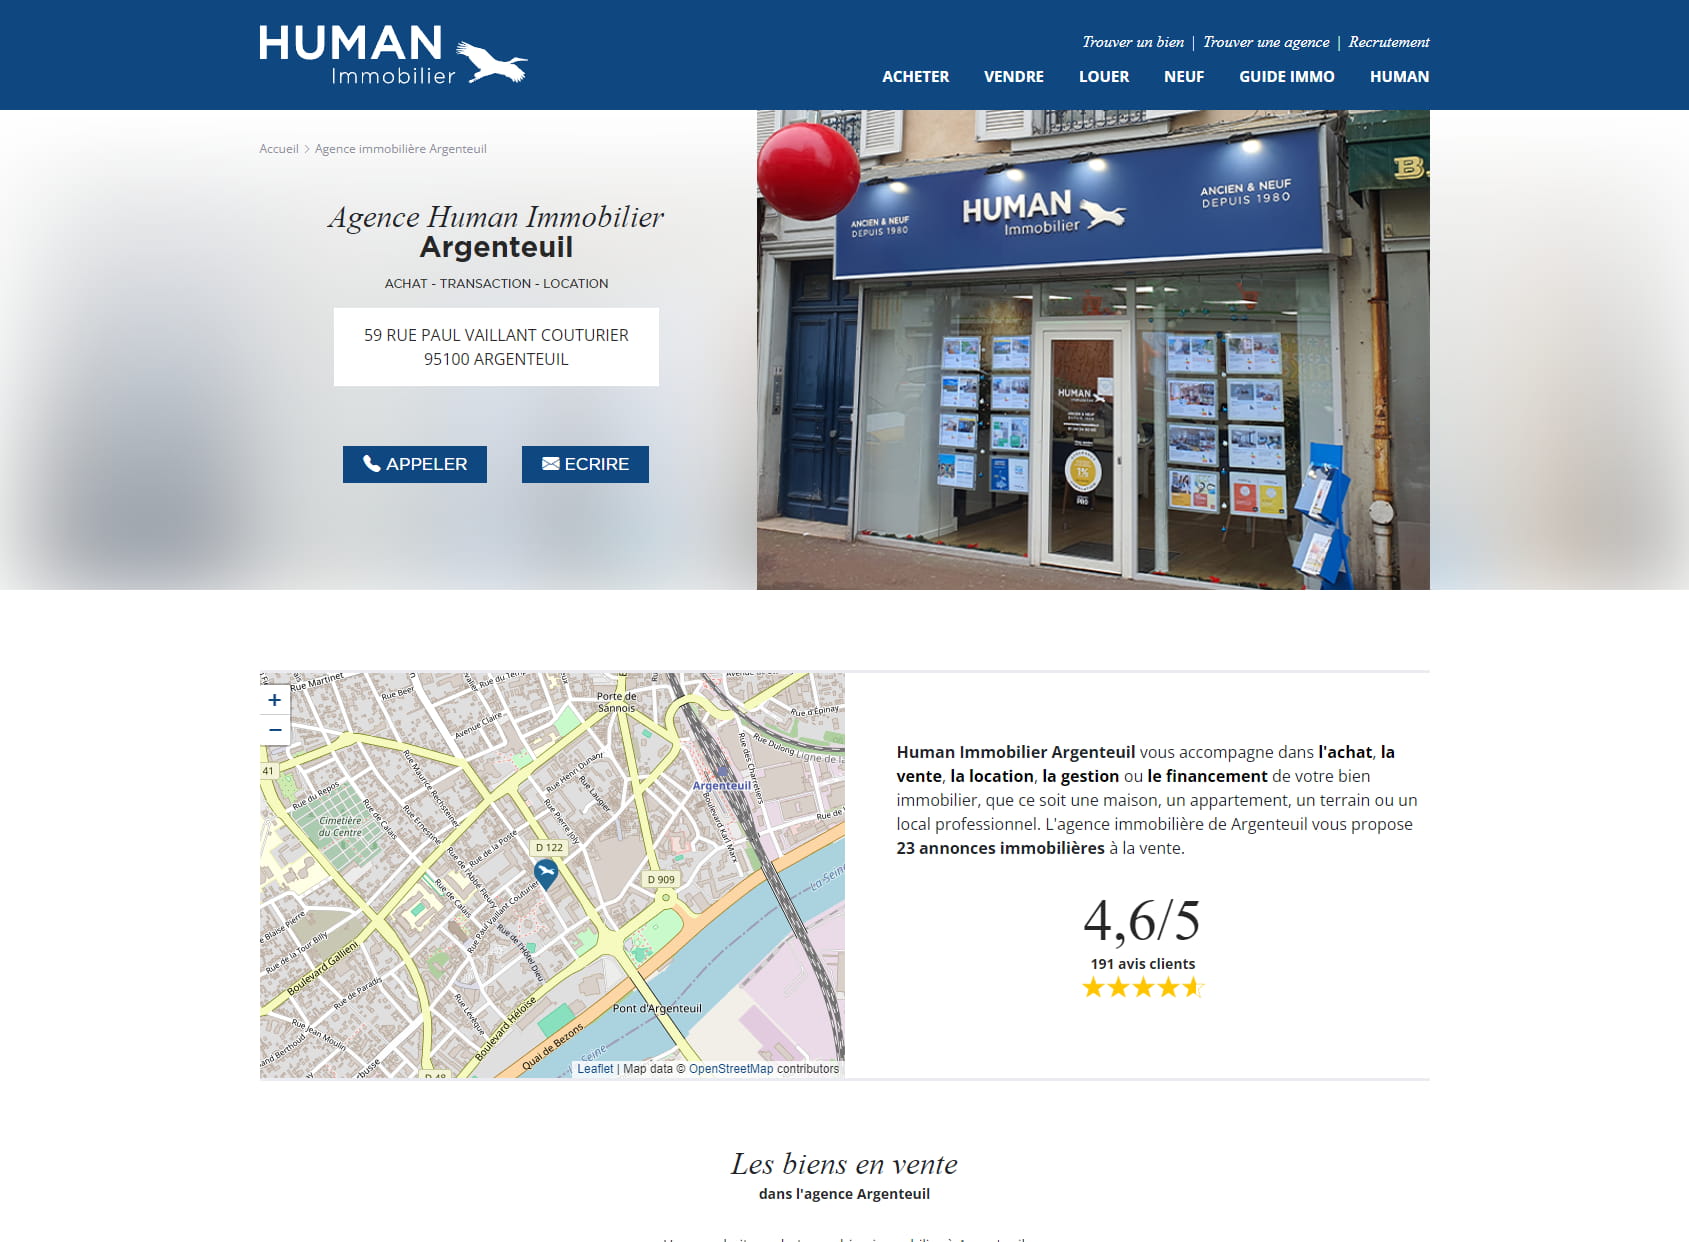 Human Immobilier Argenteuil